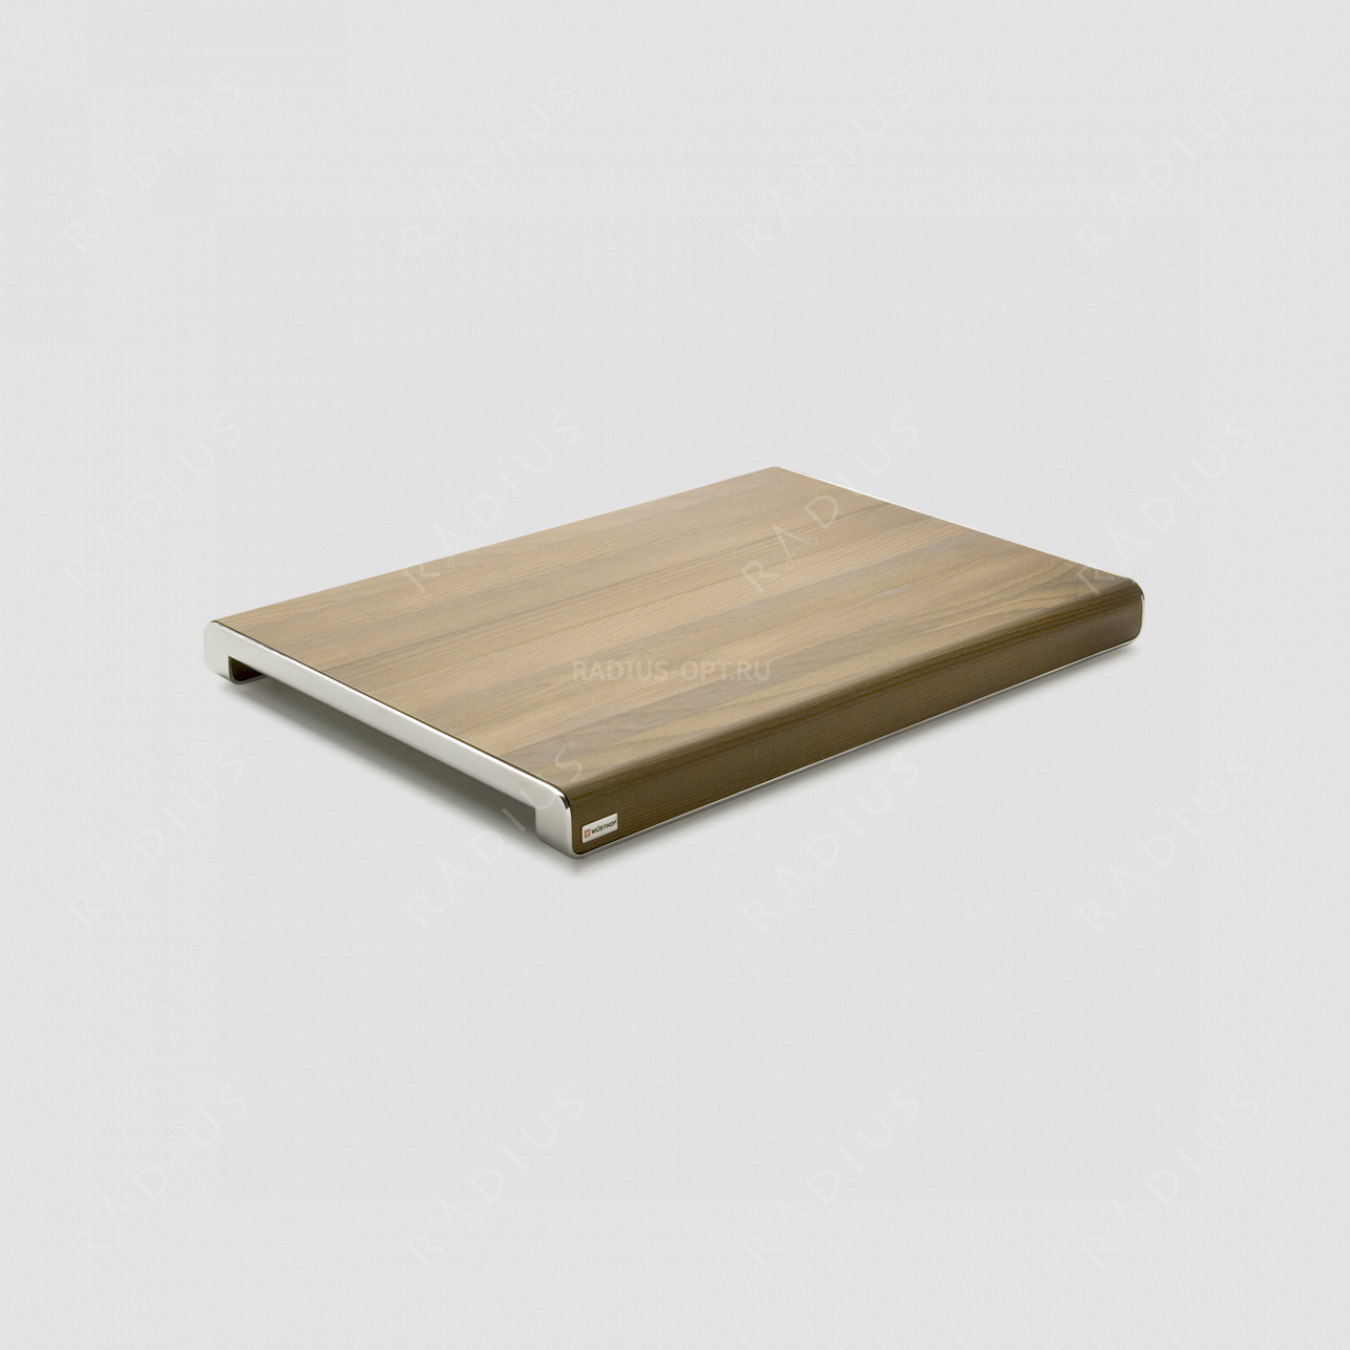 Доска разделочная деревянная 50х35х4 см, серия Cutting boards, WUESTHOF, Германия